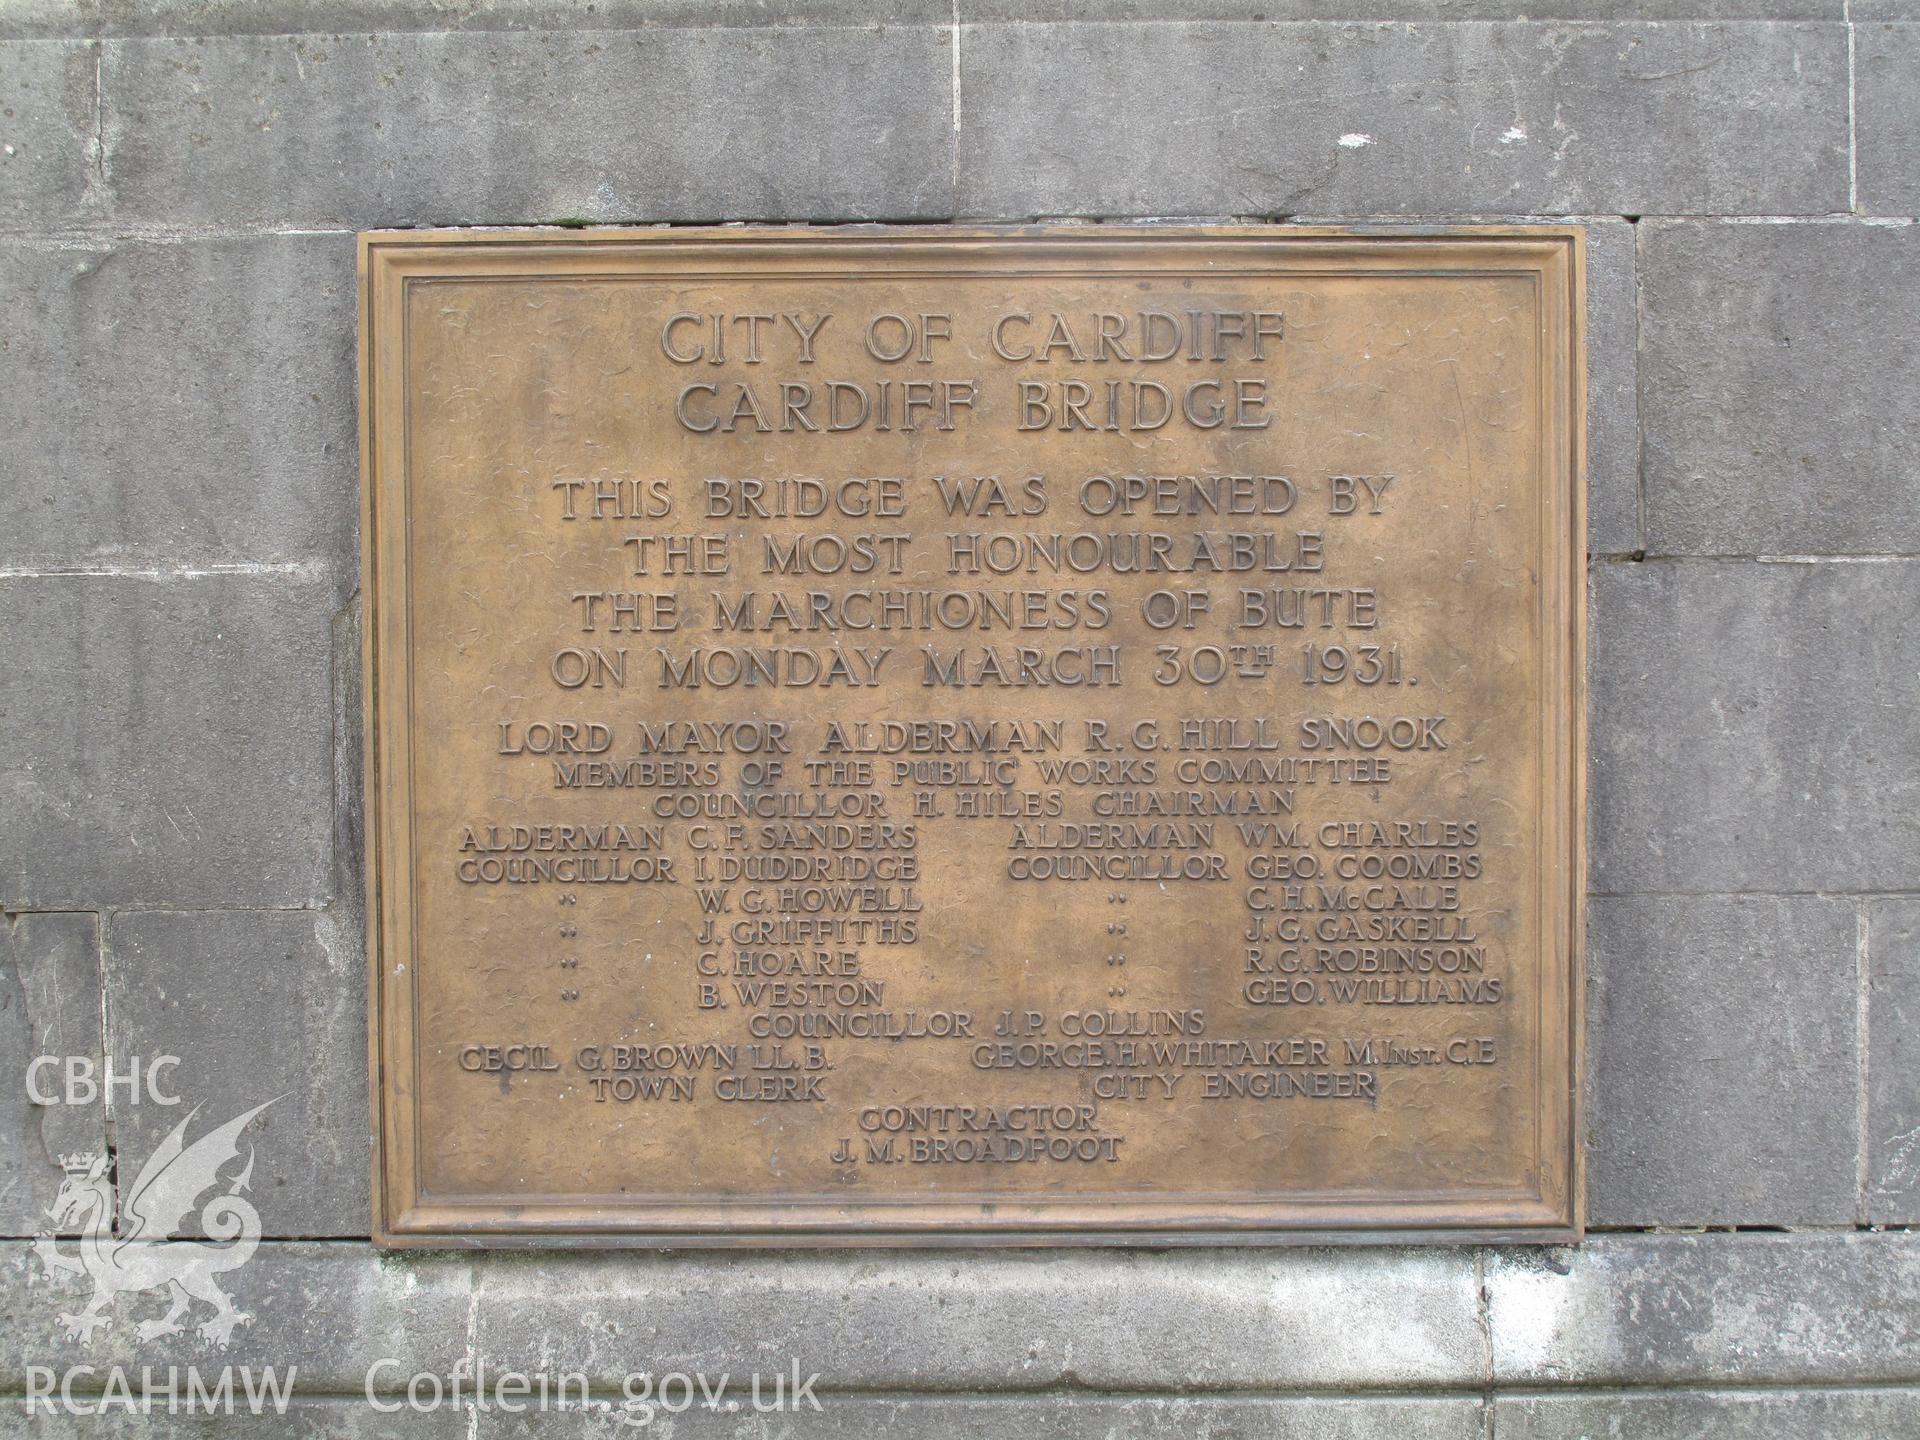 Commemorative plaque on Cardiff Bridge.